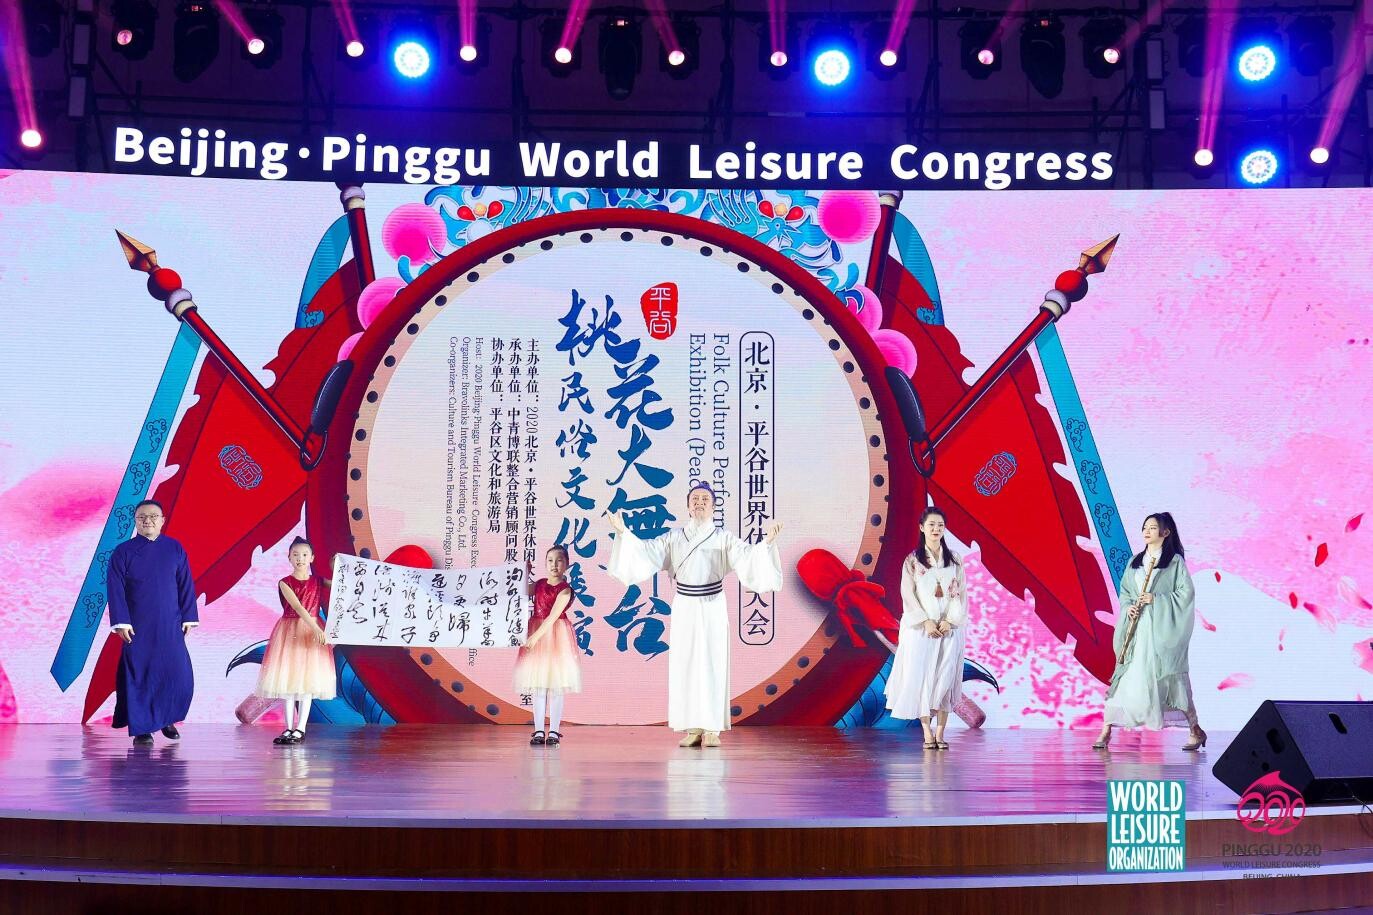 World Leisure Congress ครั้งที่ 16 เปิดเวทีแลกเปลี่ยนแนวคิดการพักผ่อน พร้อมดันอุตสาหกรรมก้าวไกล